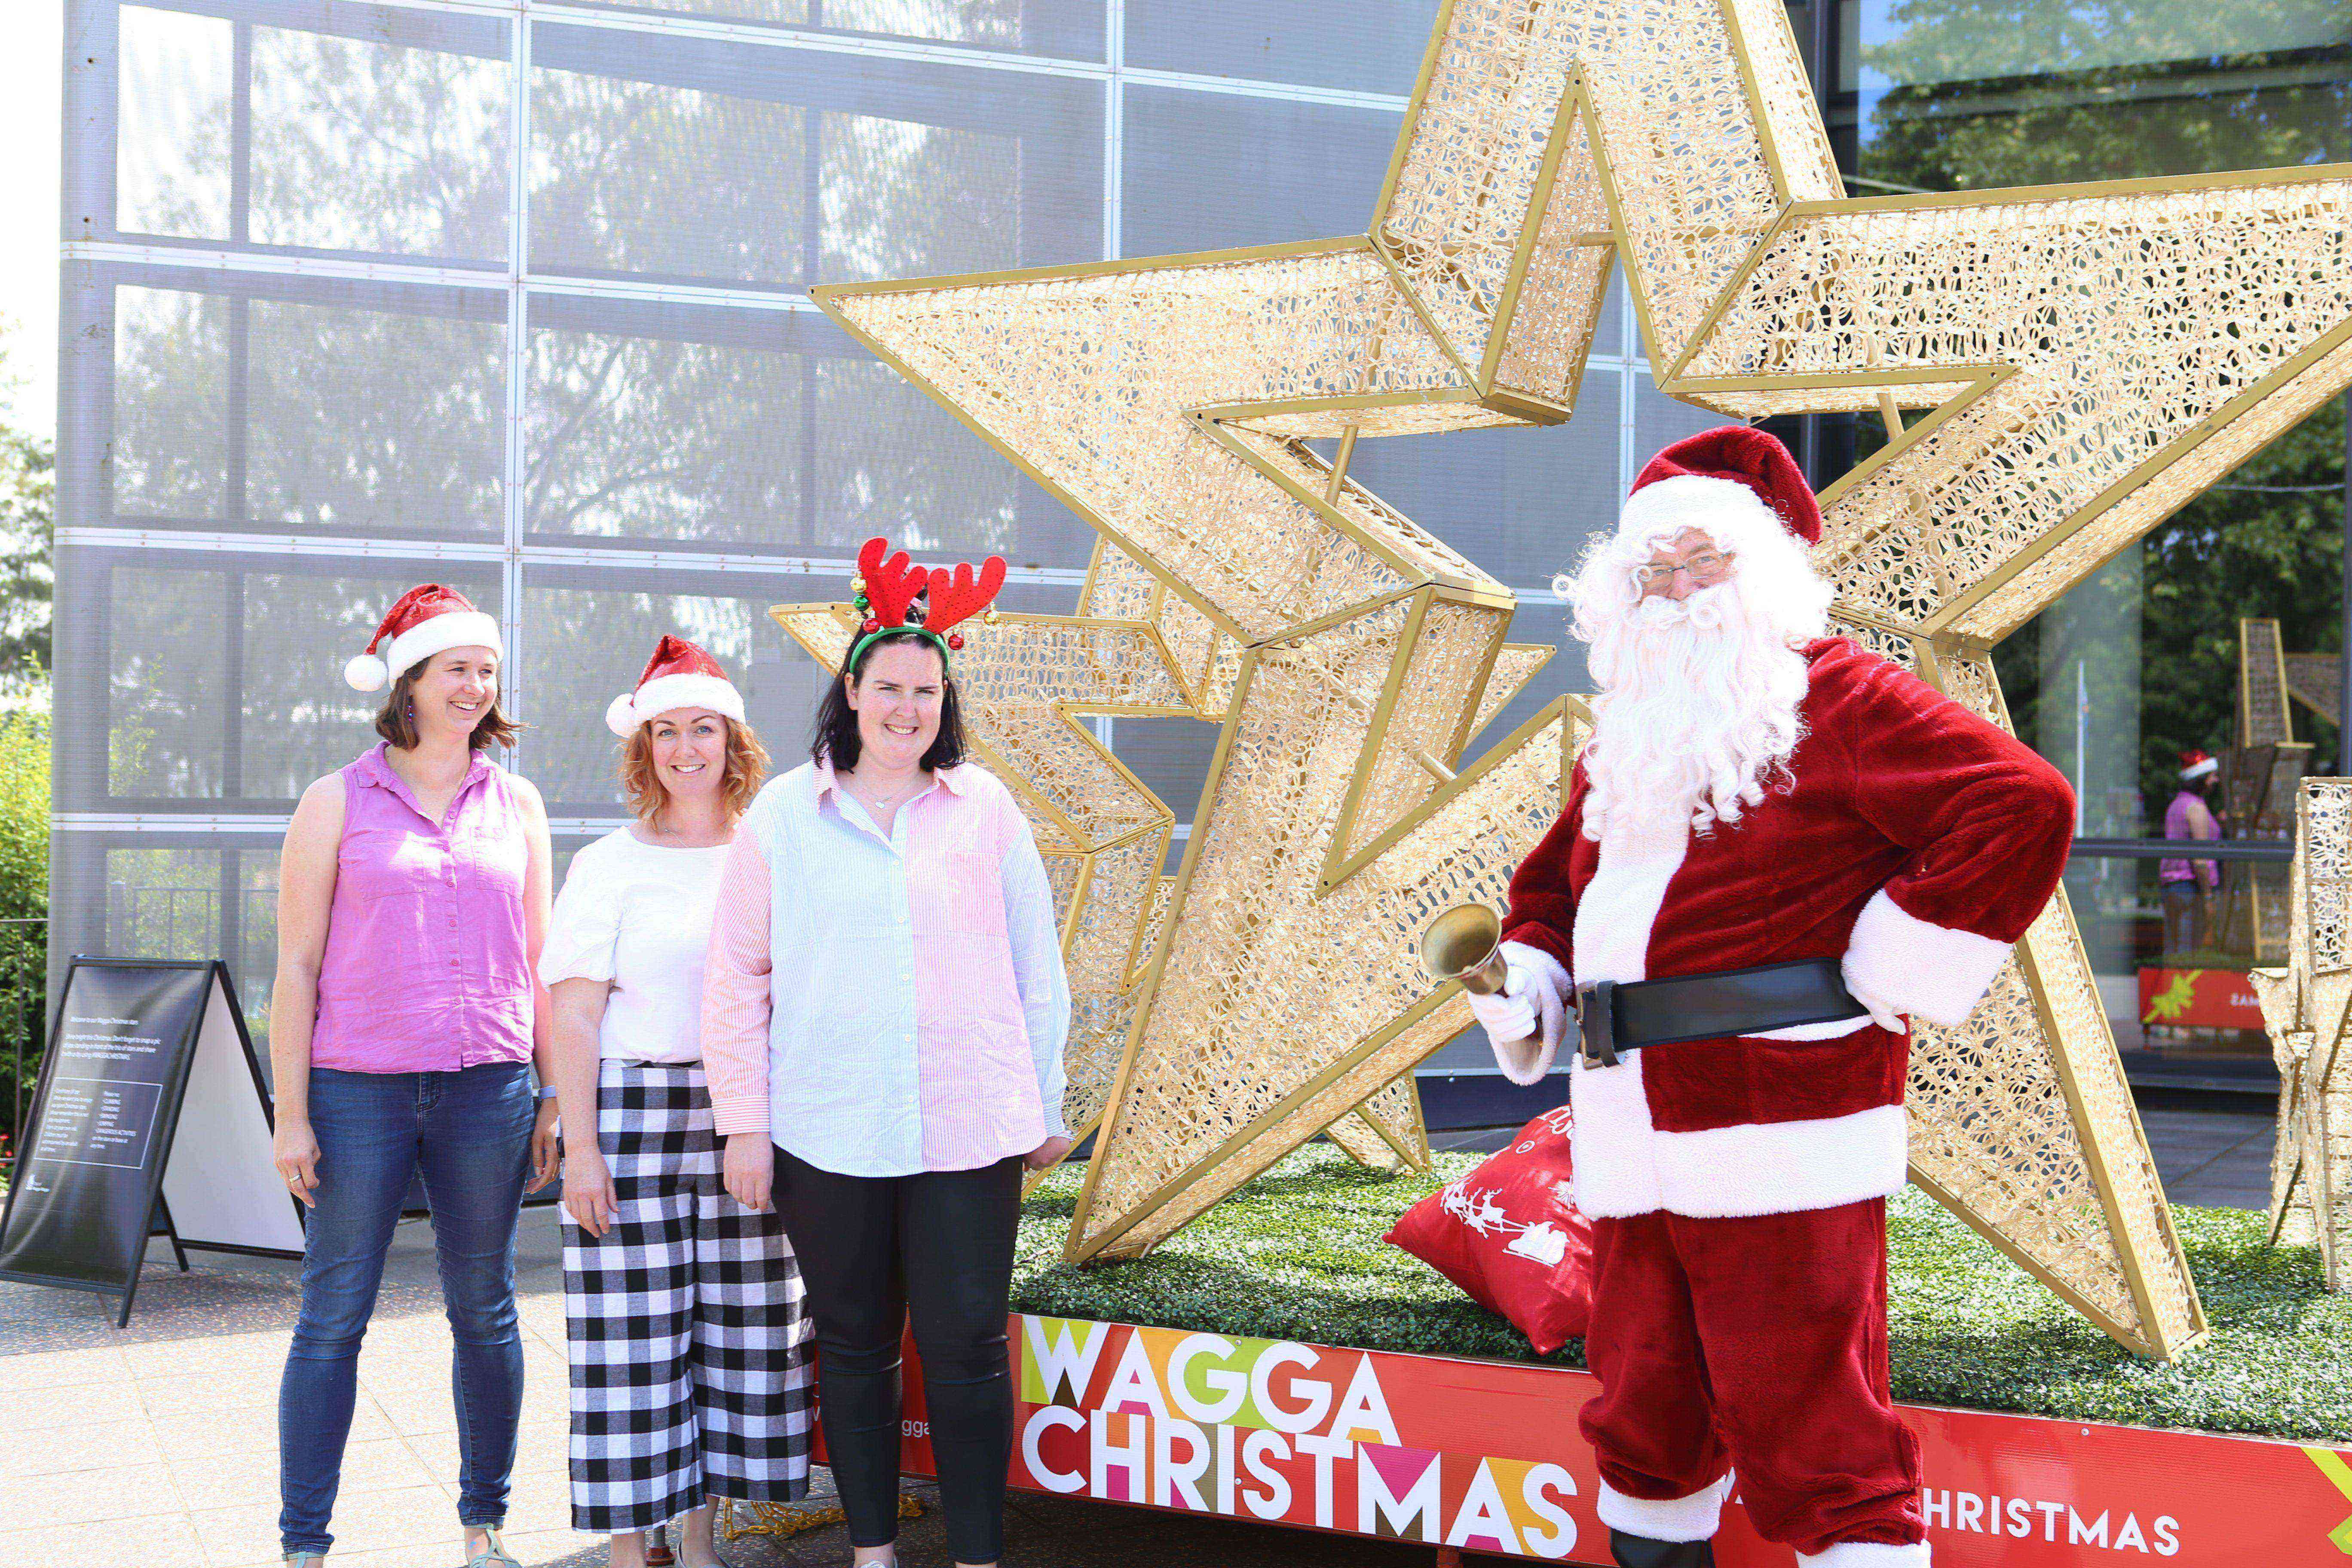 No sleigh for Santa as he jingles into Wagga this year